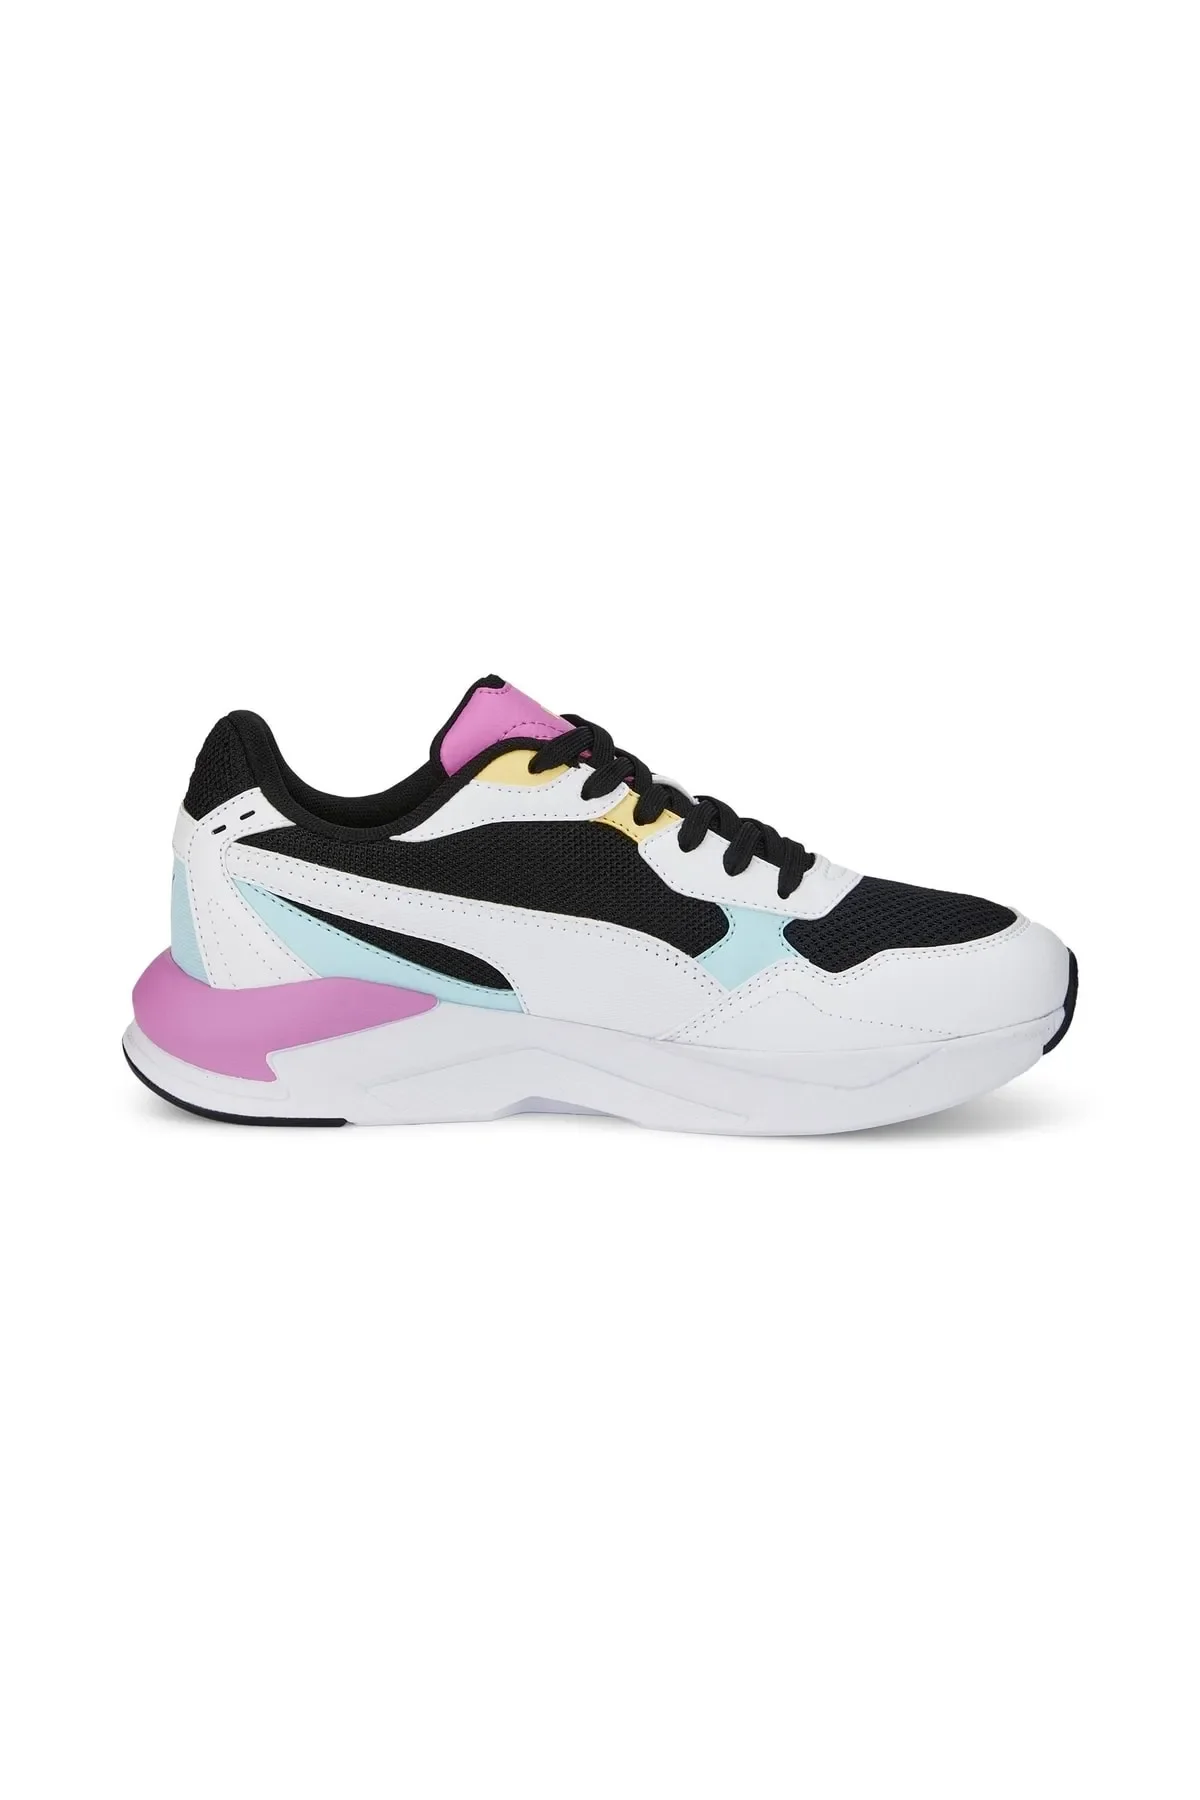 X-Ray Speed Lite - Kadın Sneaker Ayakkabı 384639 -Siyah - 2